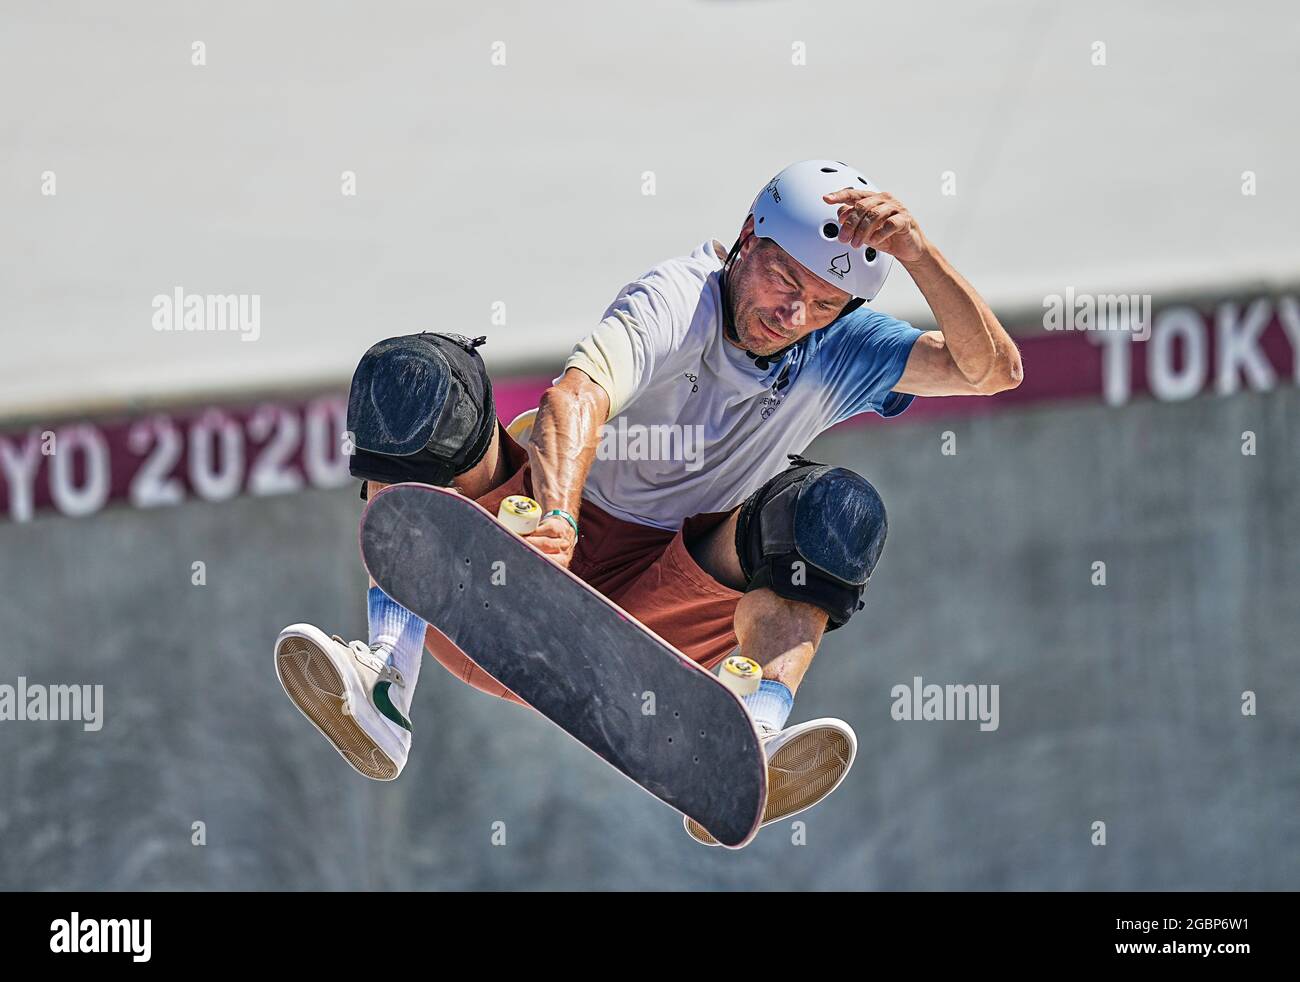 August 5, 2021: Rune Glifberg during men's park skateboard at the Olympics  at Ariake Urban Park, Tokyo, Japan. Kim Price/CSM Stock Photo - Alamy